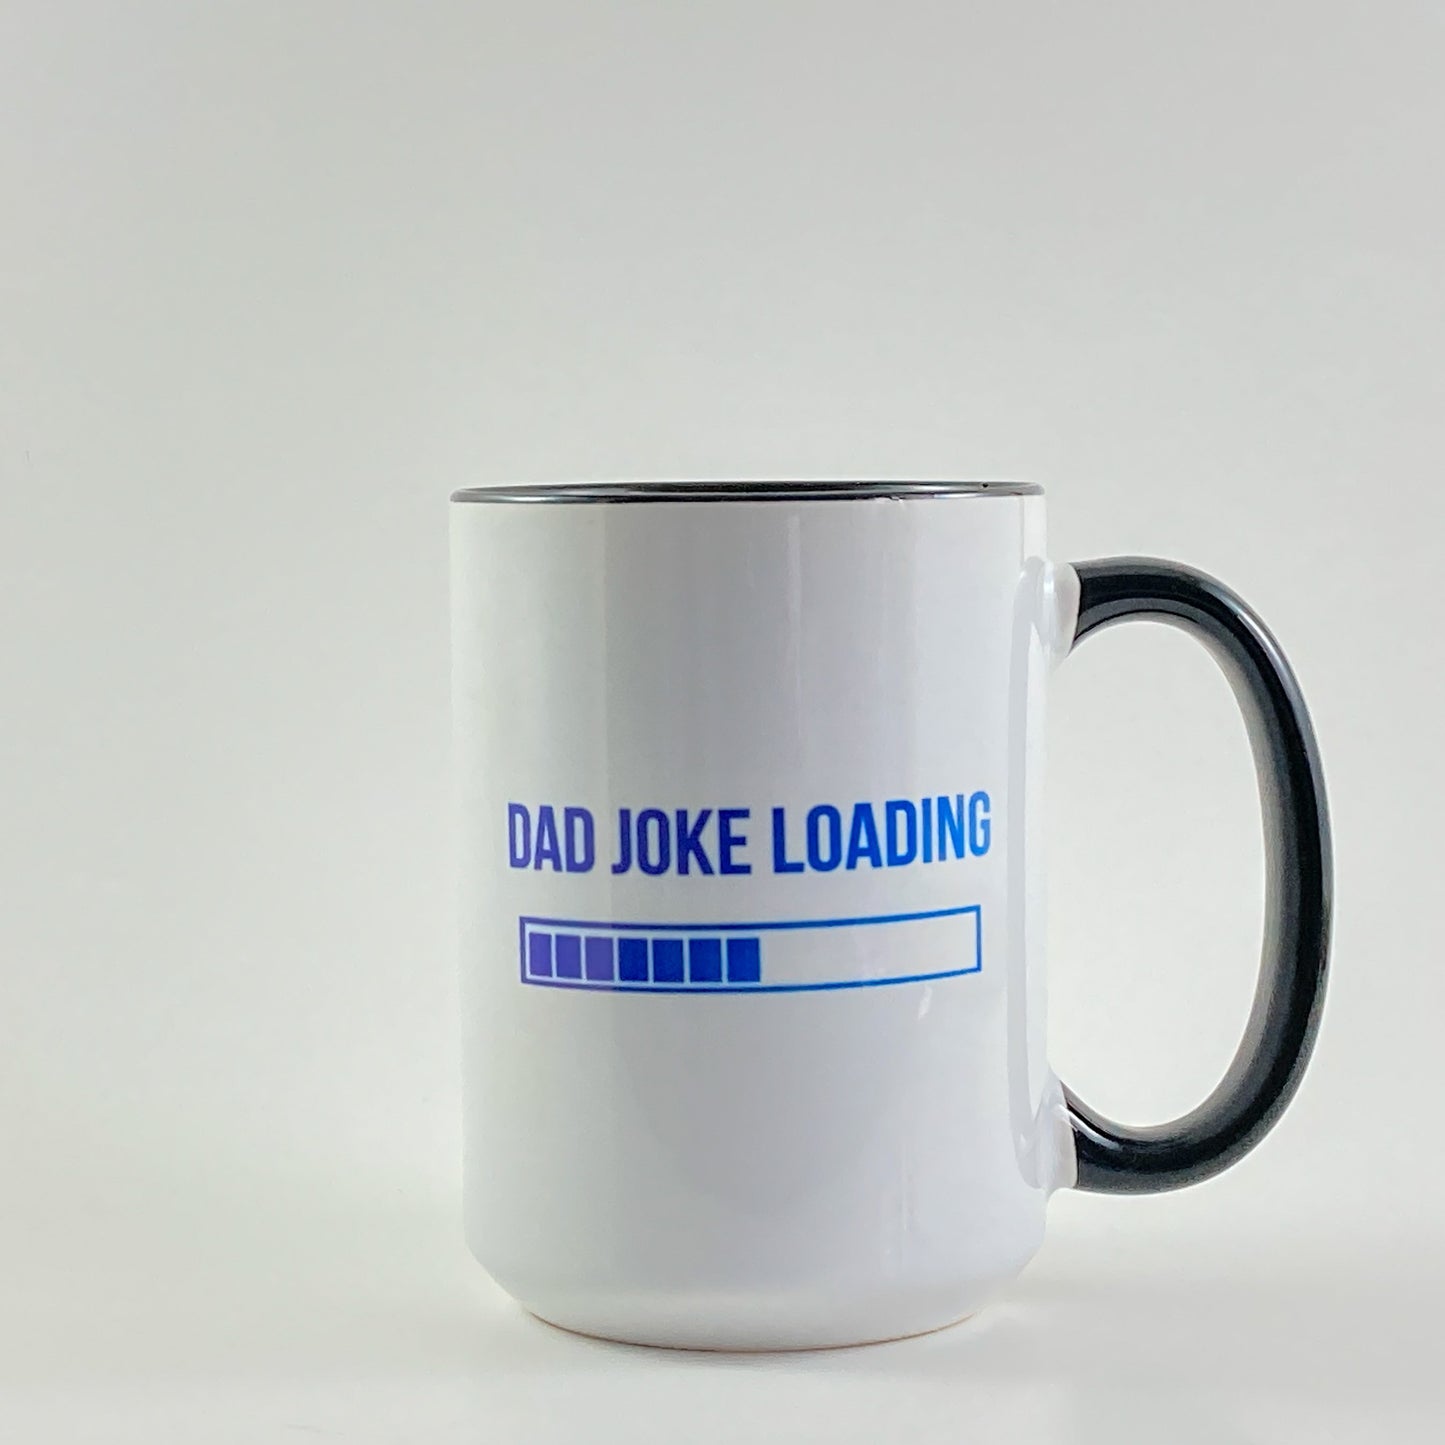 Dad Joke Loading - 15 oz Coffee Mug